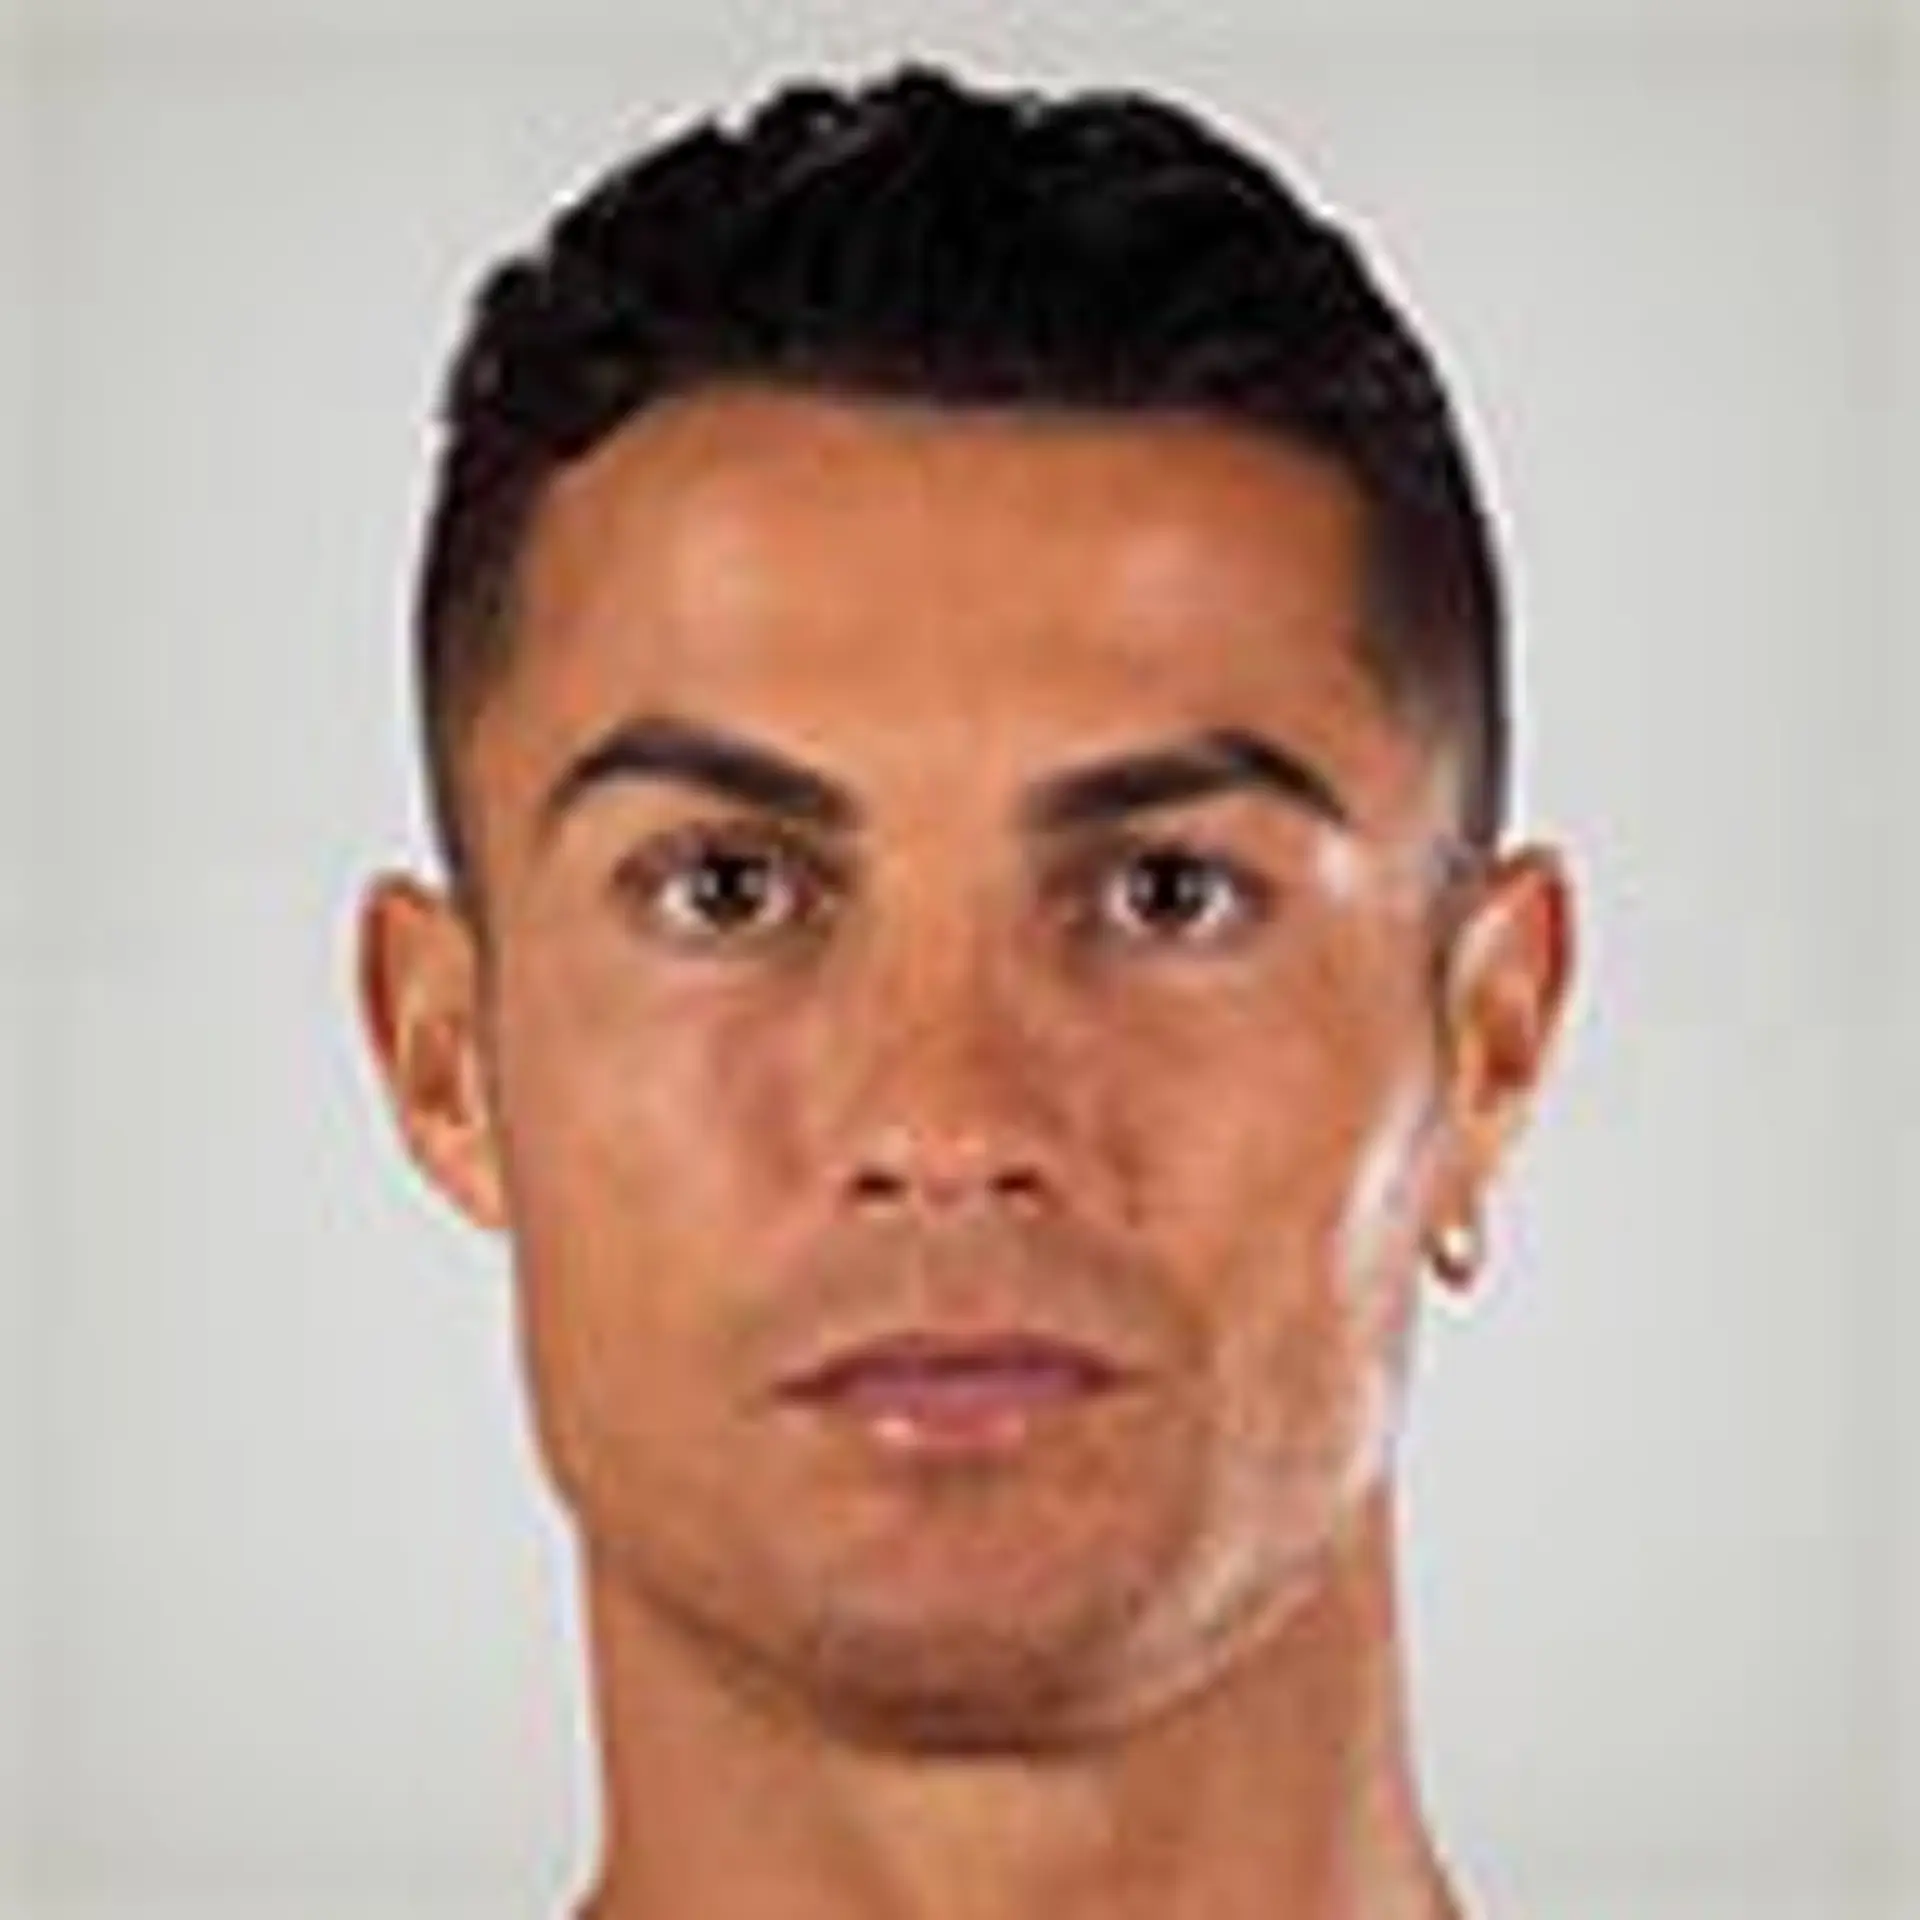 Cristiano Ronaldo freekick hit cameraman on the head